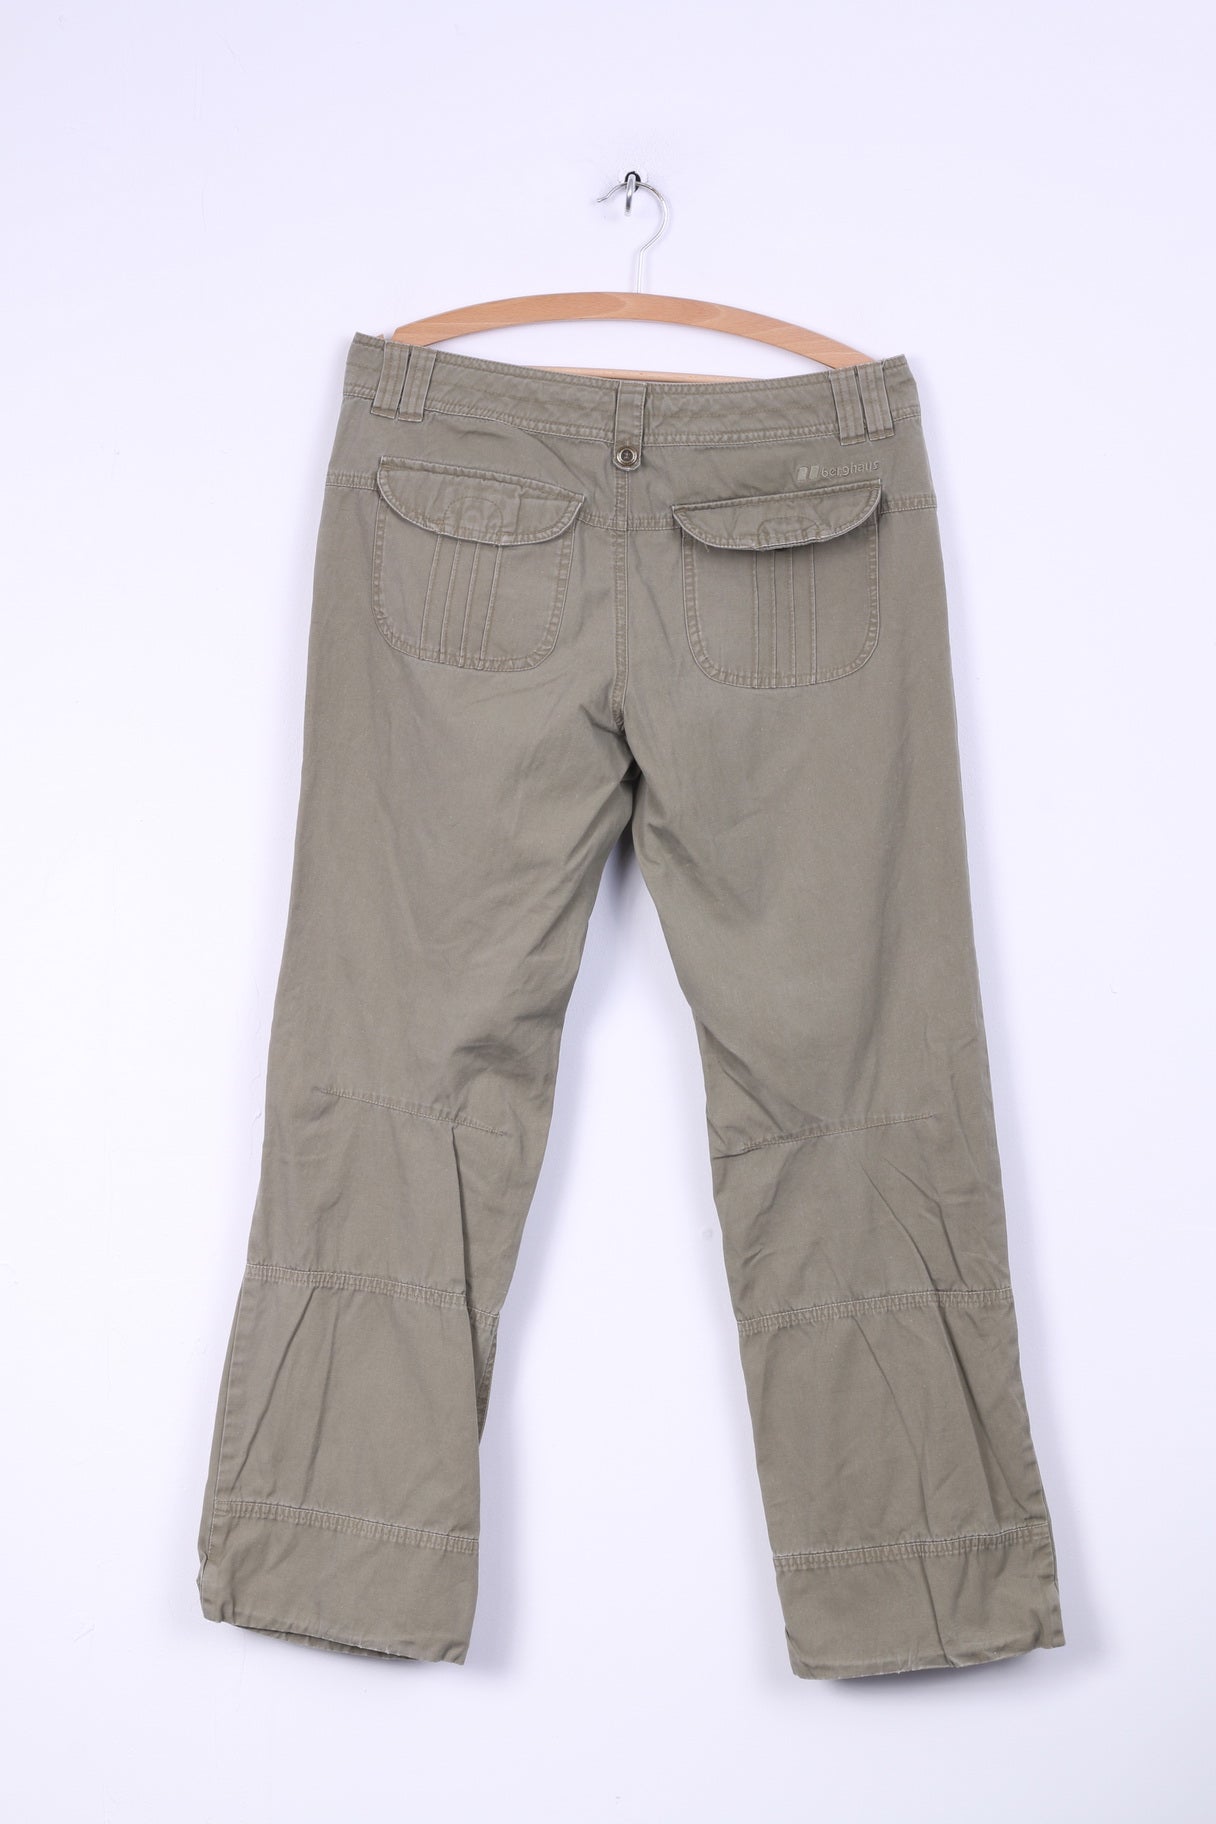 Berghaus Womens 12 L Trousers Khaki Combat Outdoor Hikking Pants